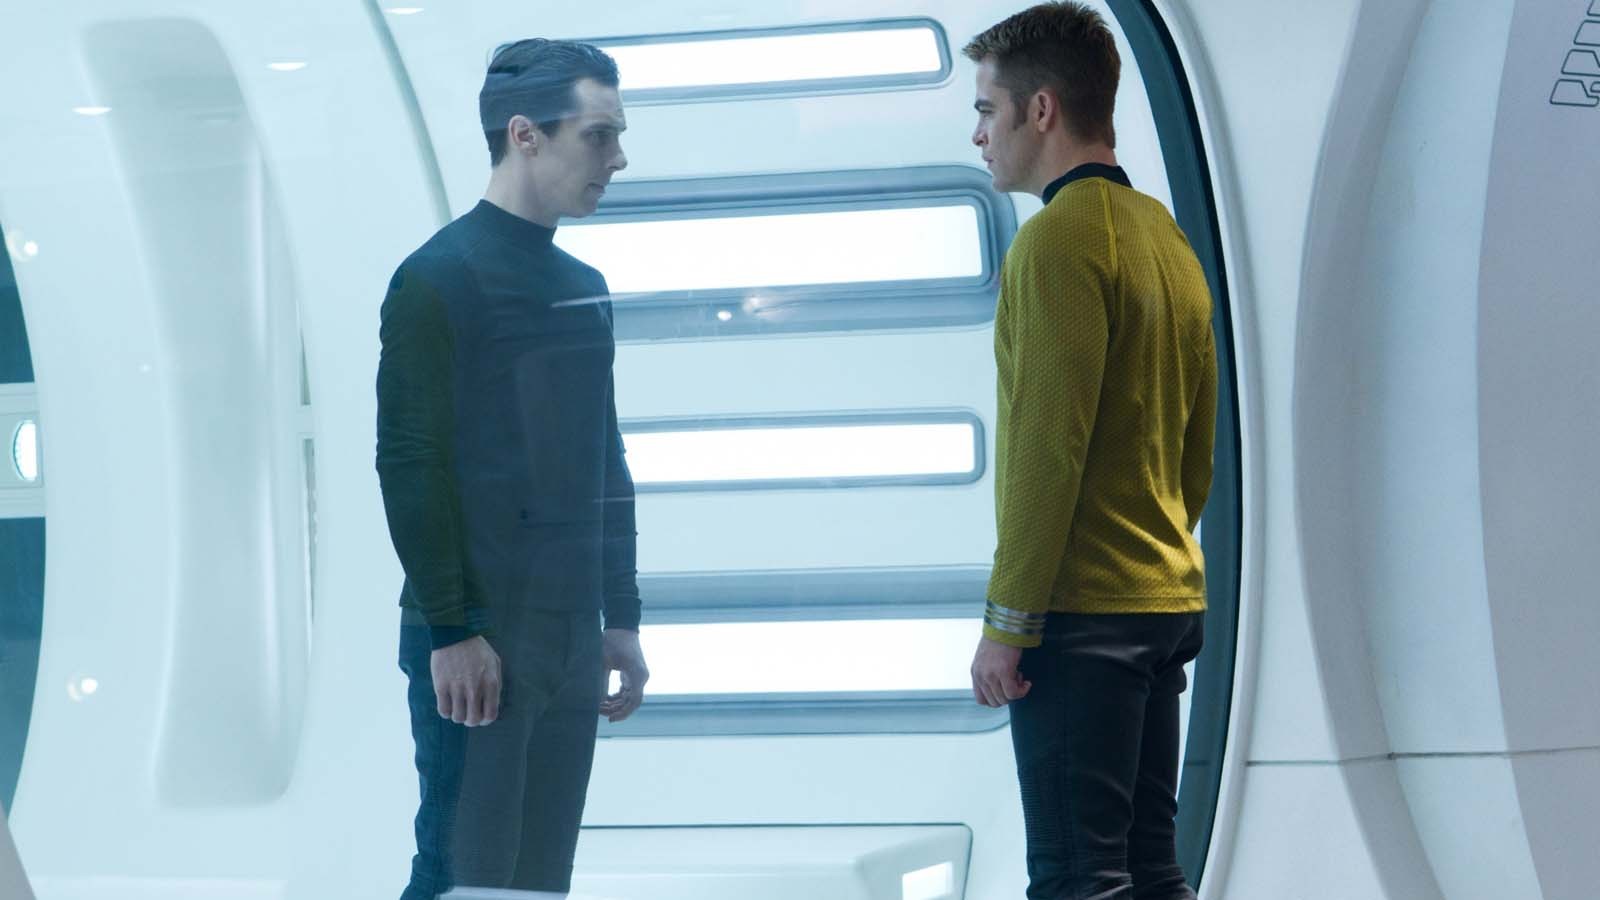 People 1600x900 Star Trek Into Darkness Benedict Cumberbatch Chris Pine Khan villains movies Star Trek movie scenes James T. Kirk